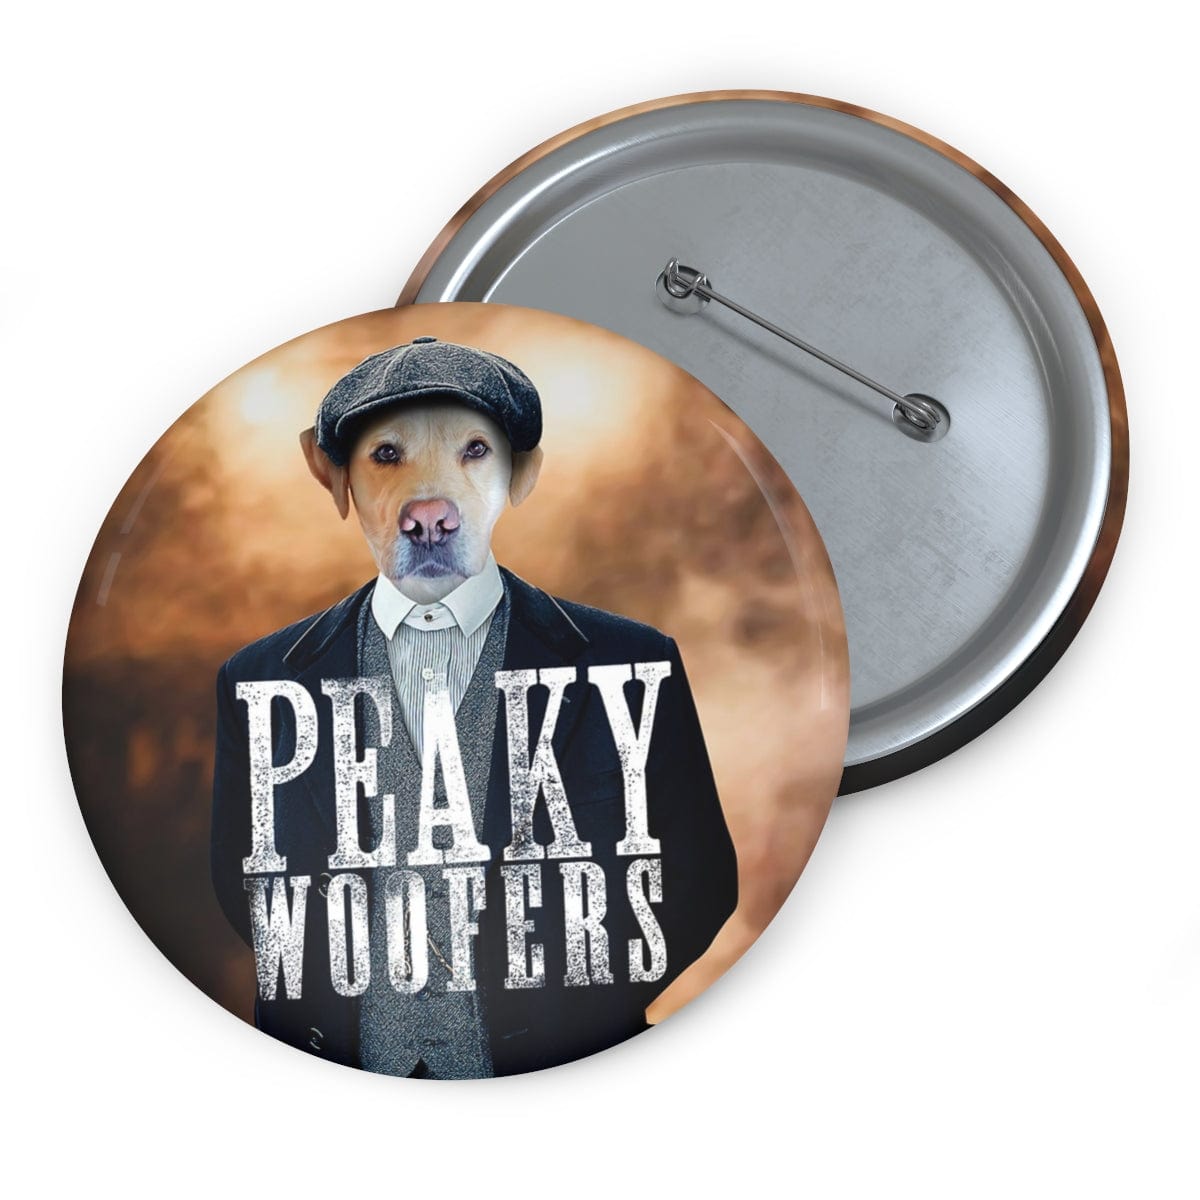 Peaky Woofer(s) (1 - 3 mascotas) Chapa personalizada